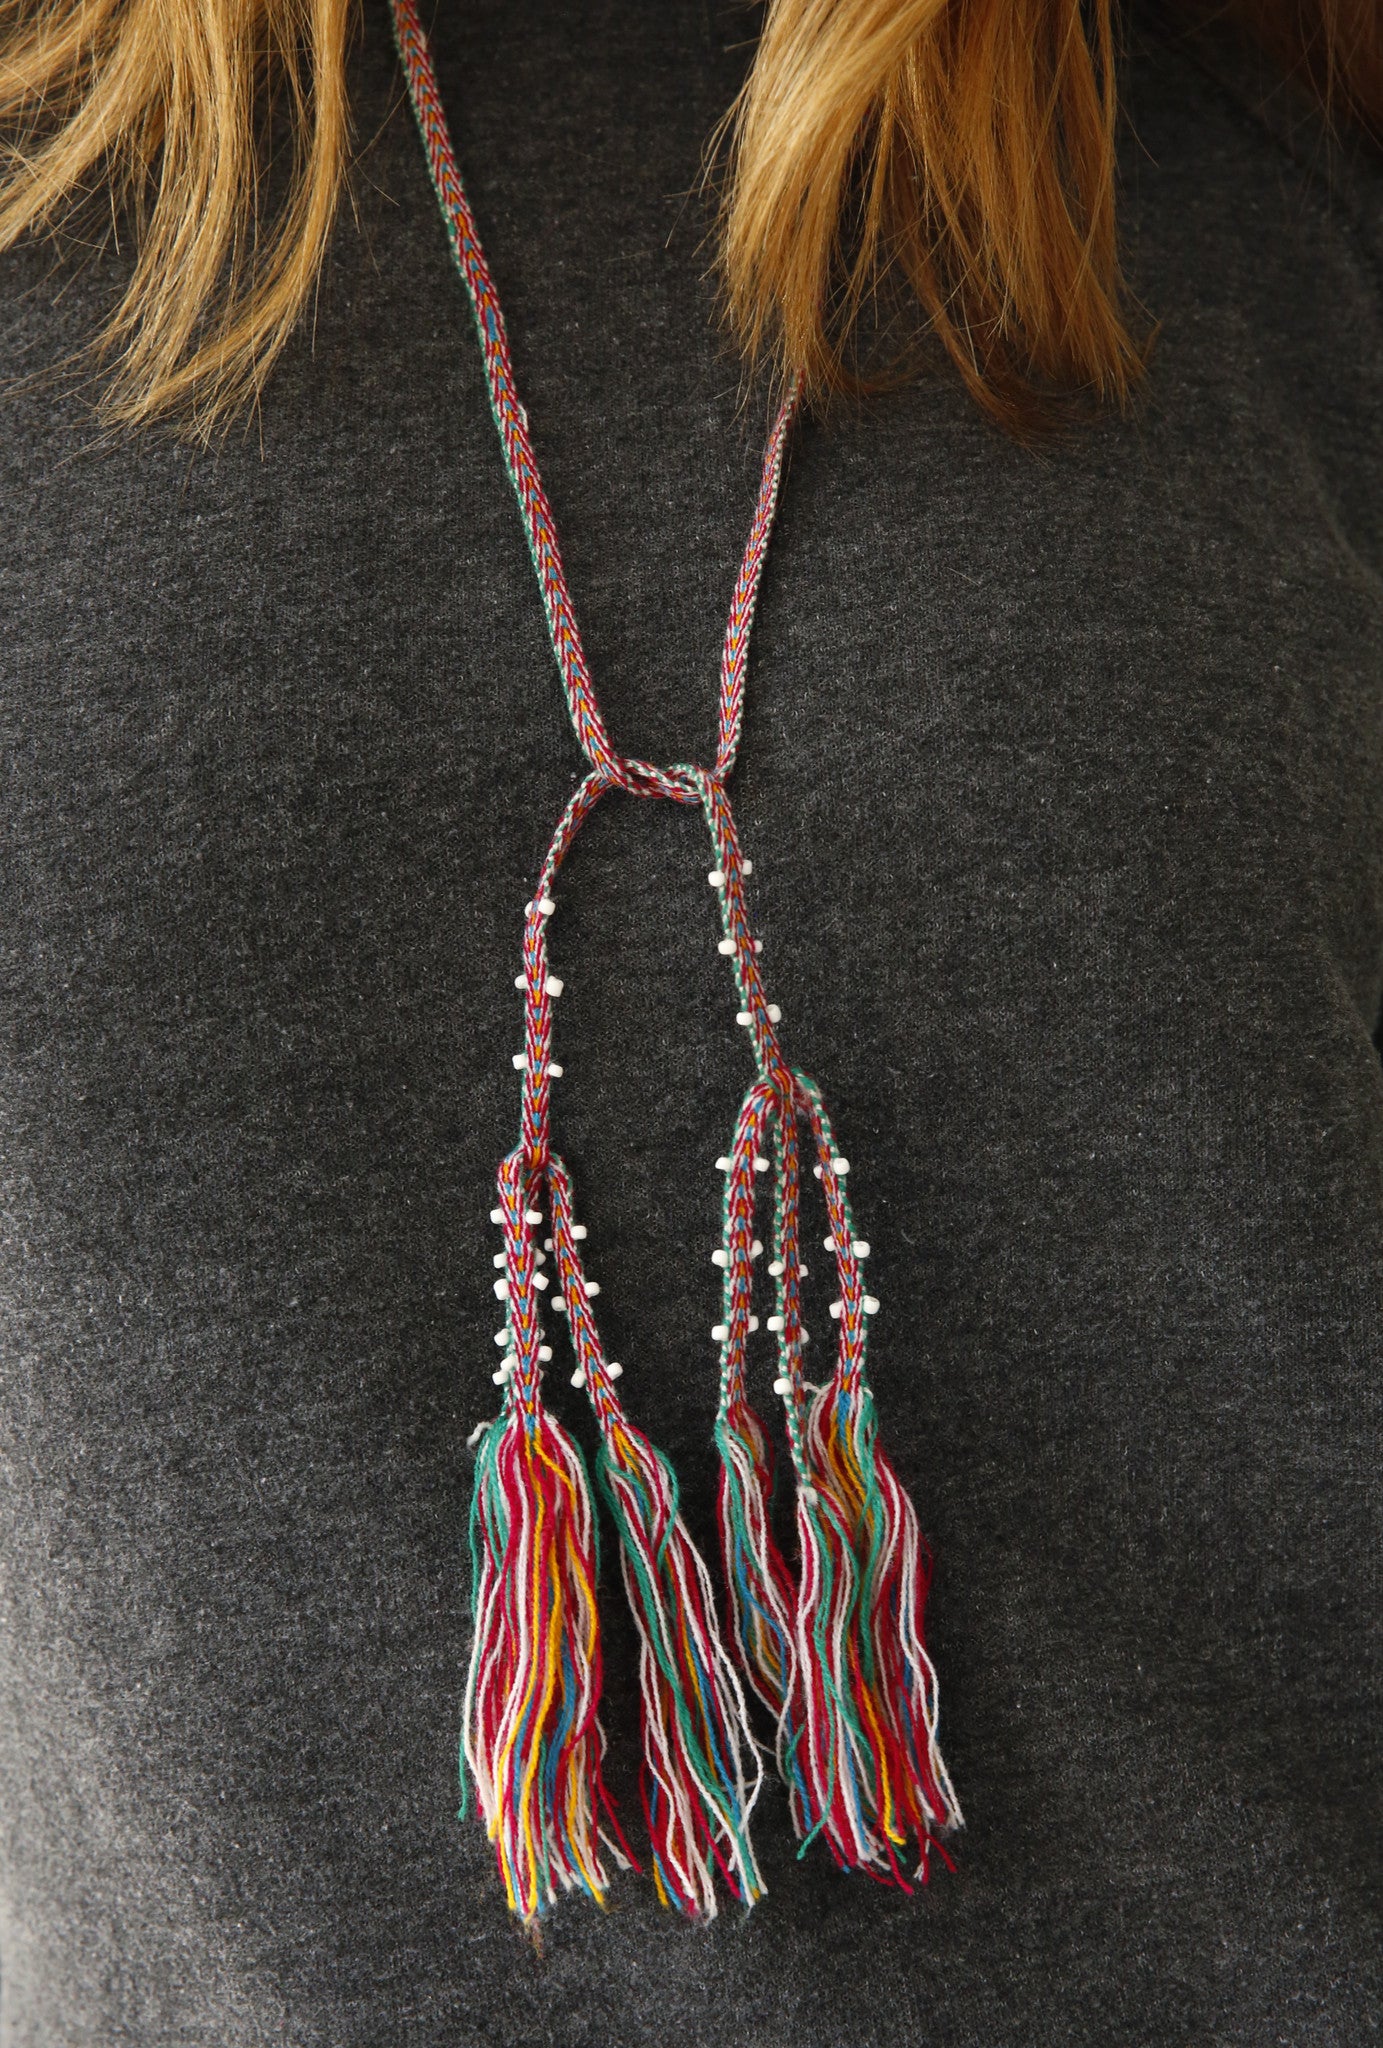 Intiearth handmade tassel necklace 